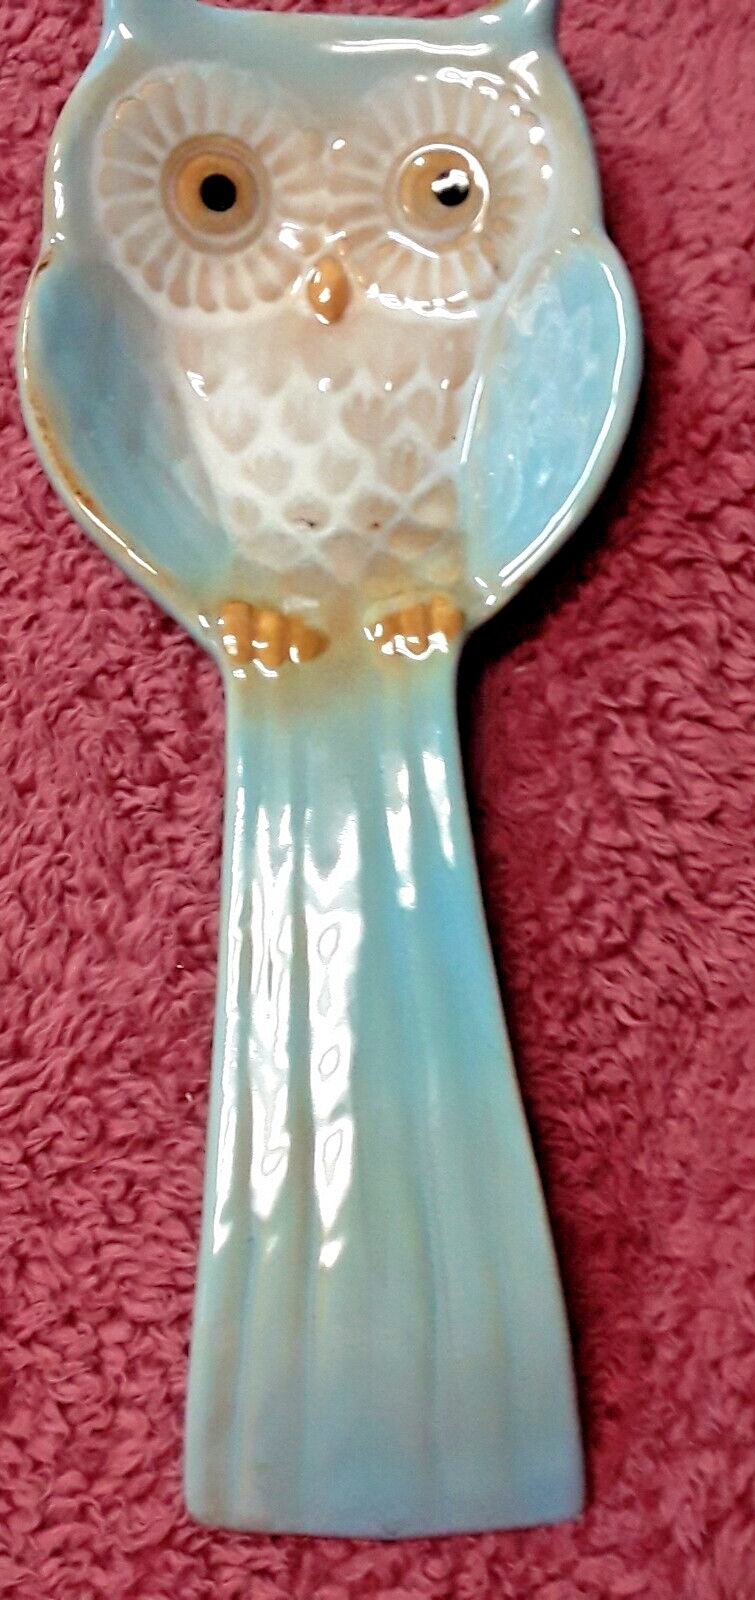 7 Inch Ceramic Owl Spoon Rest New